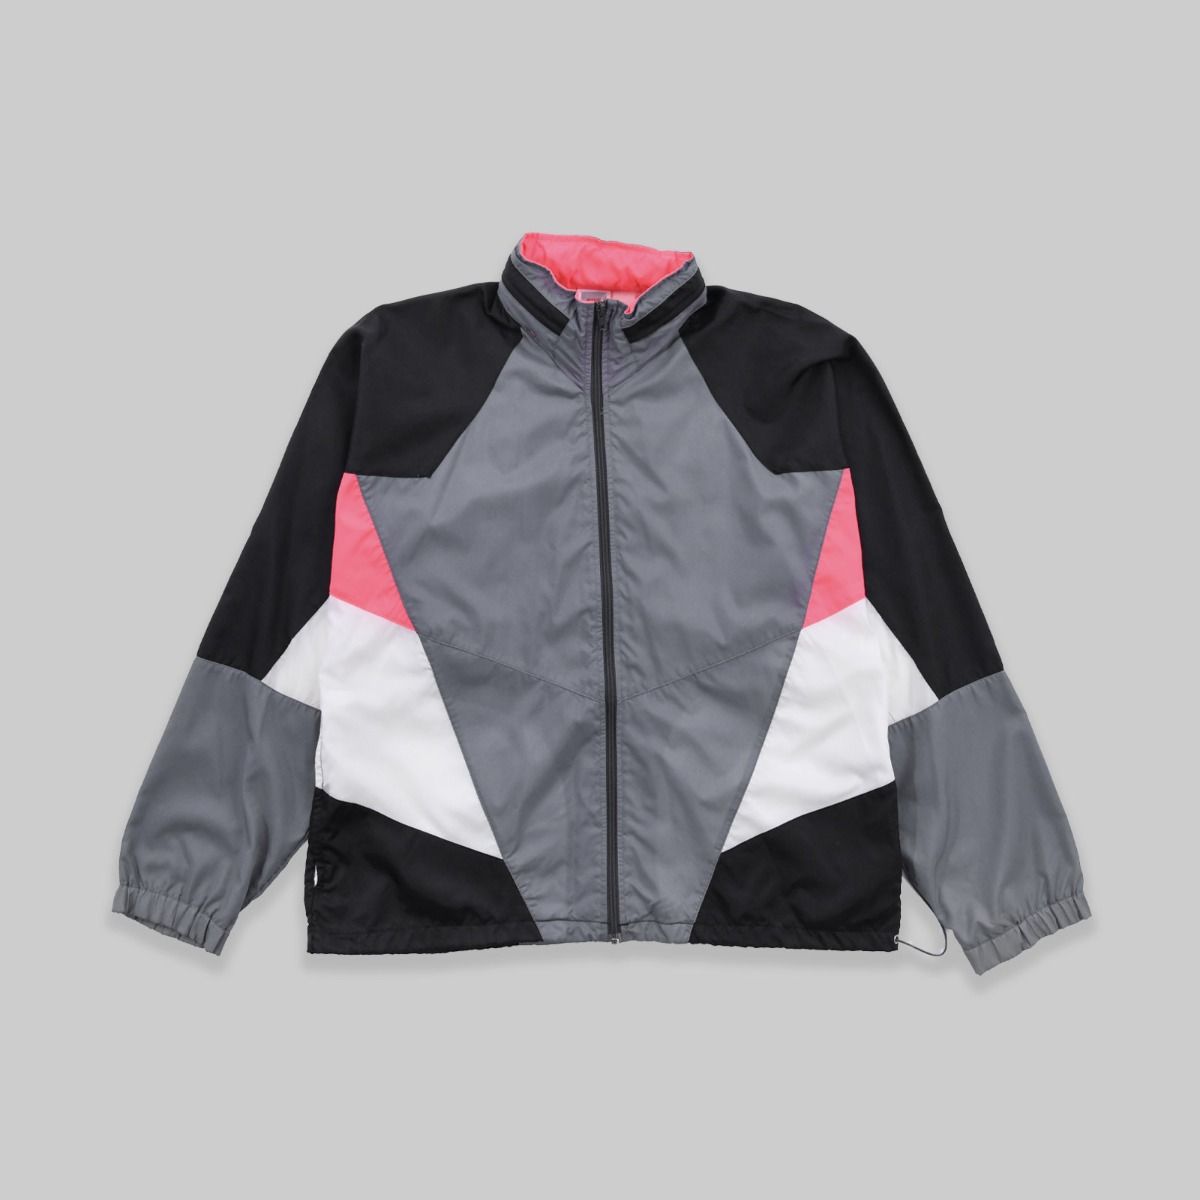 Nike Early 1990s Shell Jacket